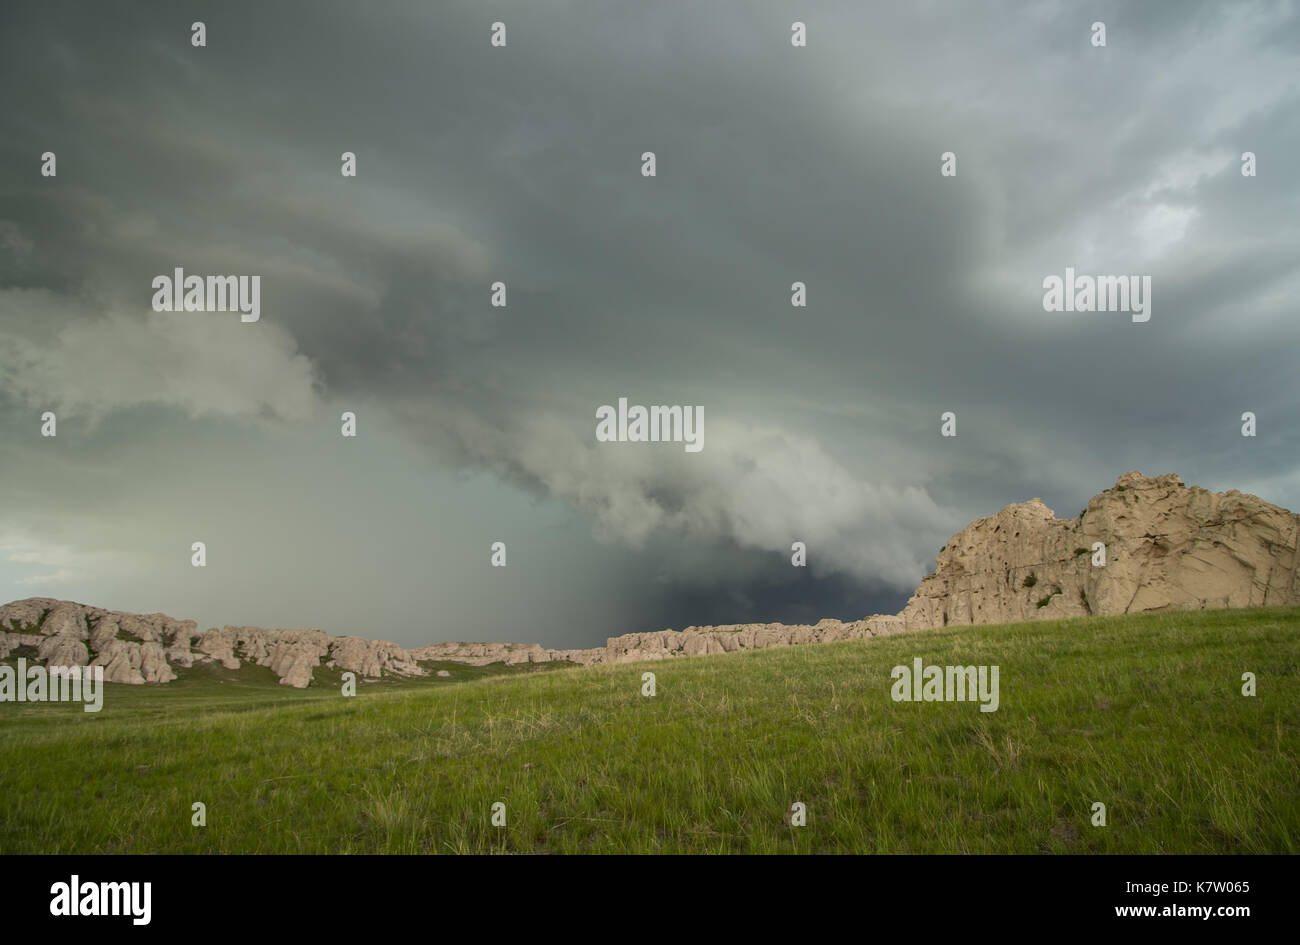 A low and ominous shelf cloud approaches rocky bluffs on a hillside in Nebraska. Stock Photo